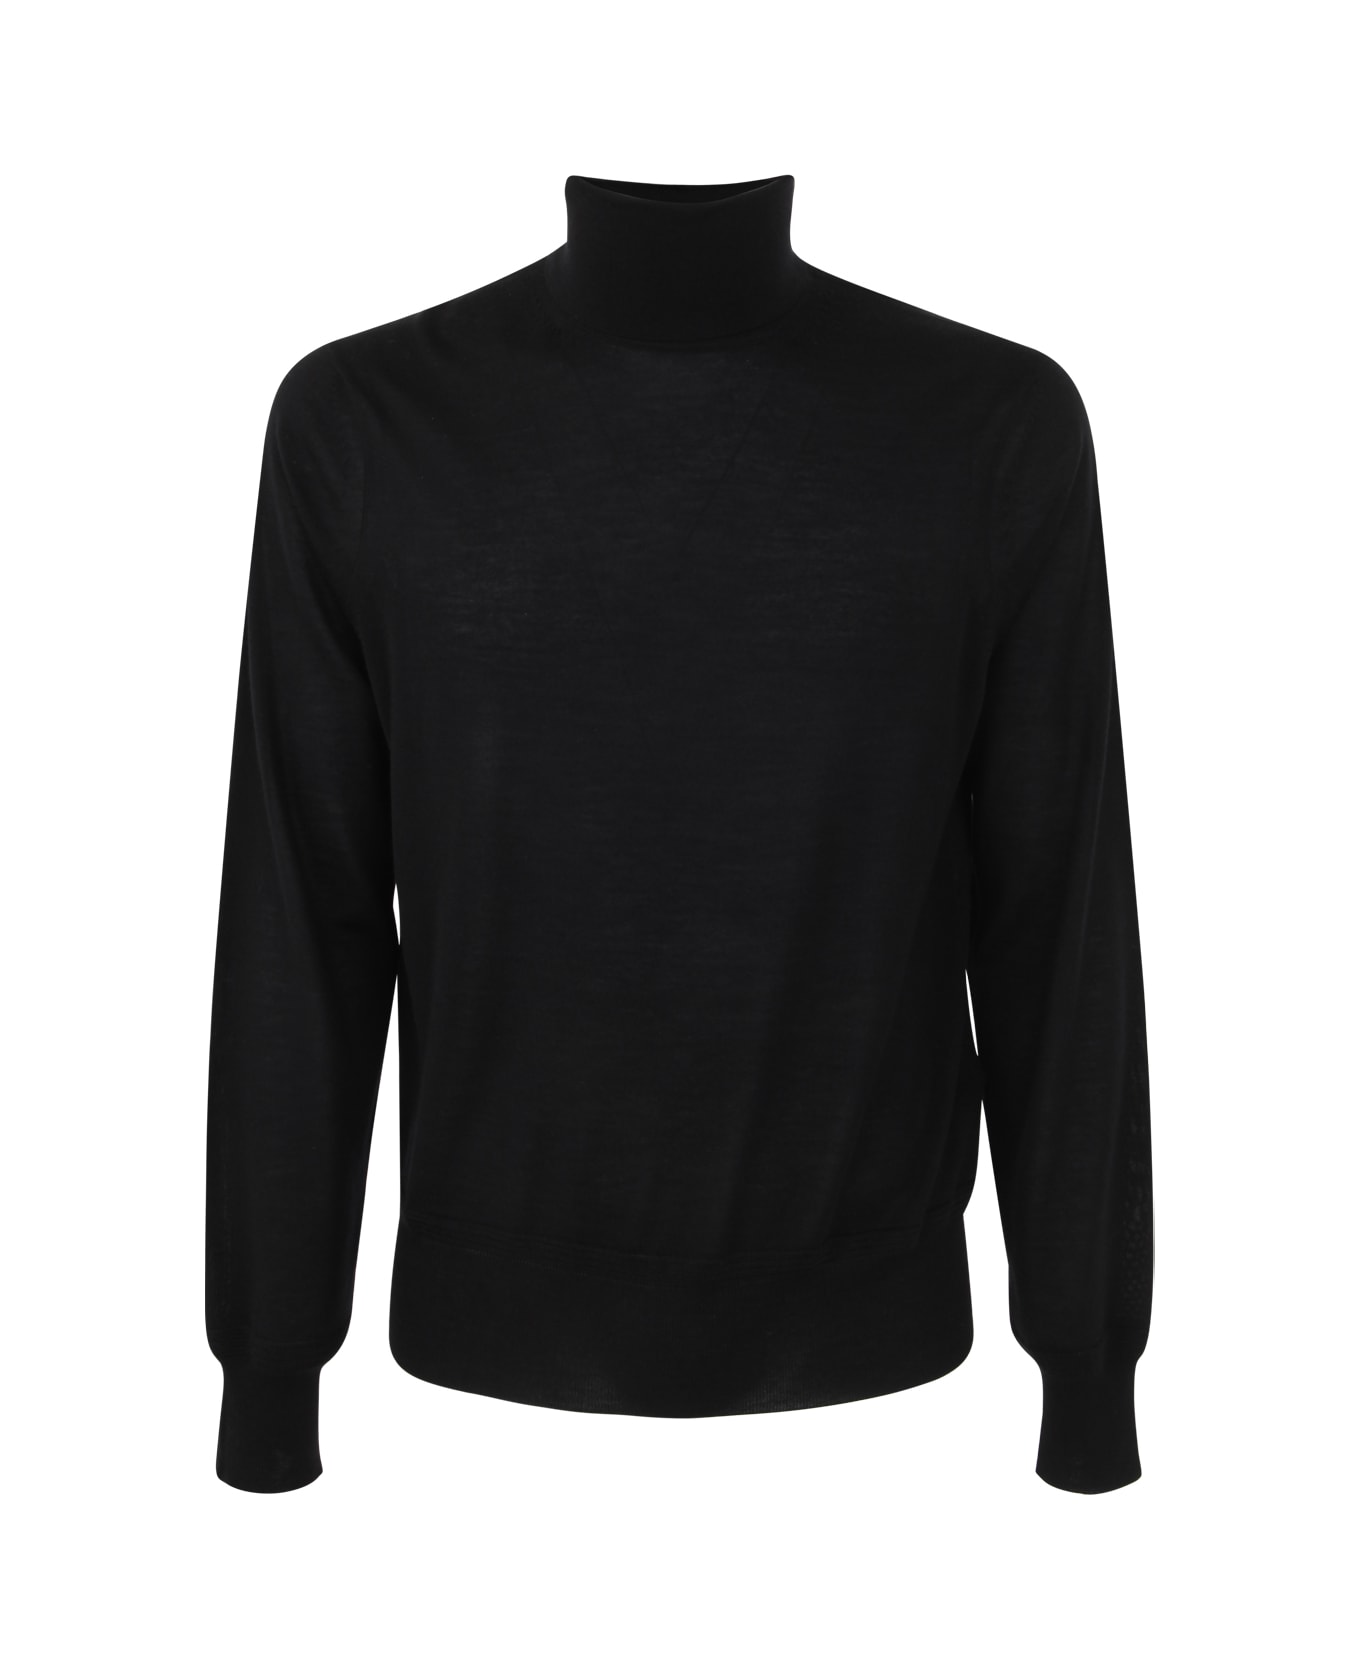 Tom Ford Turtle Neck Sweater - Black